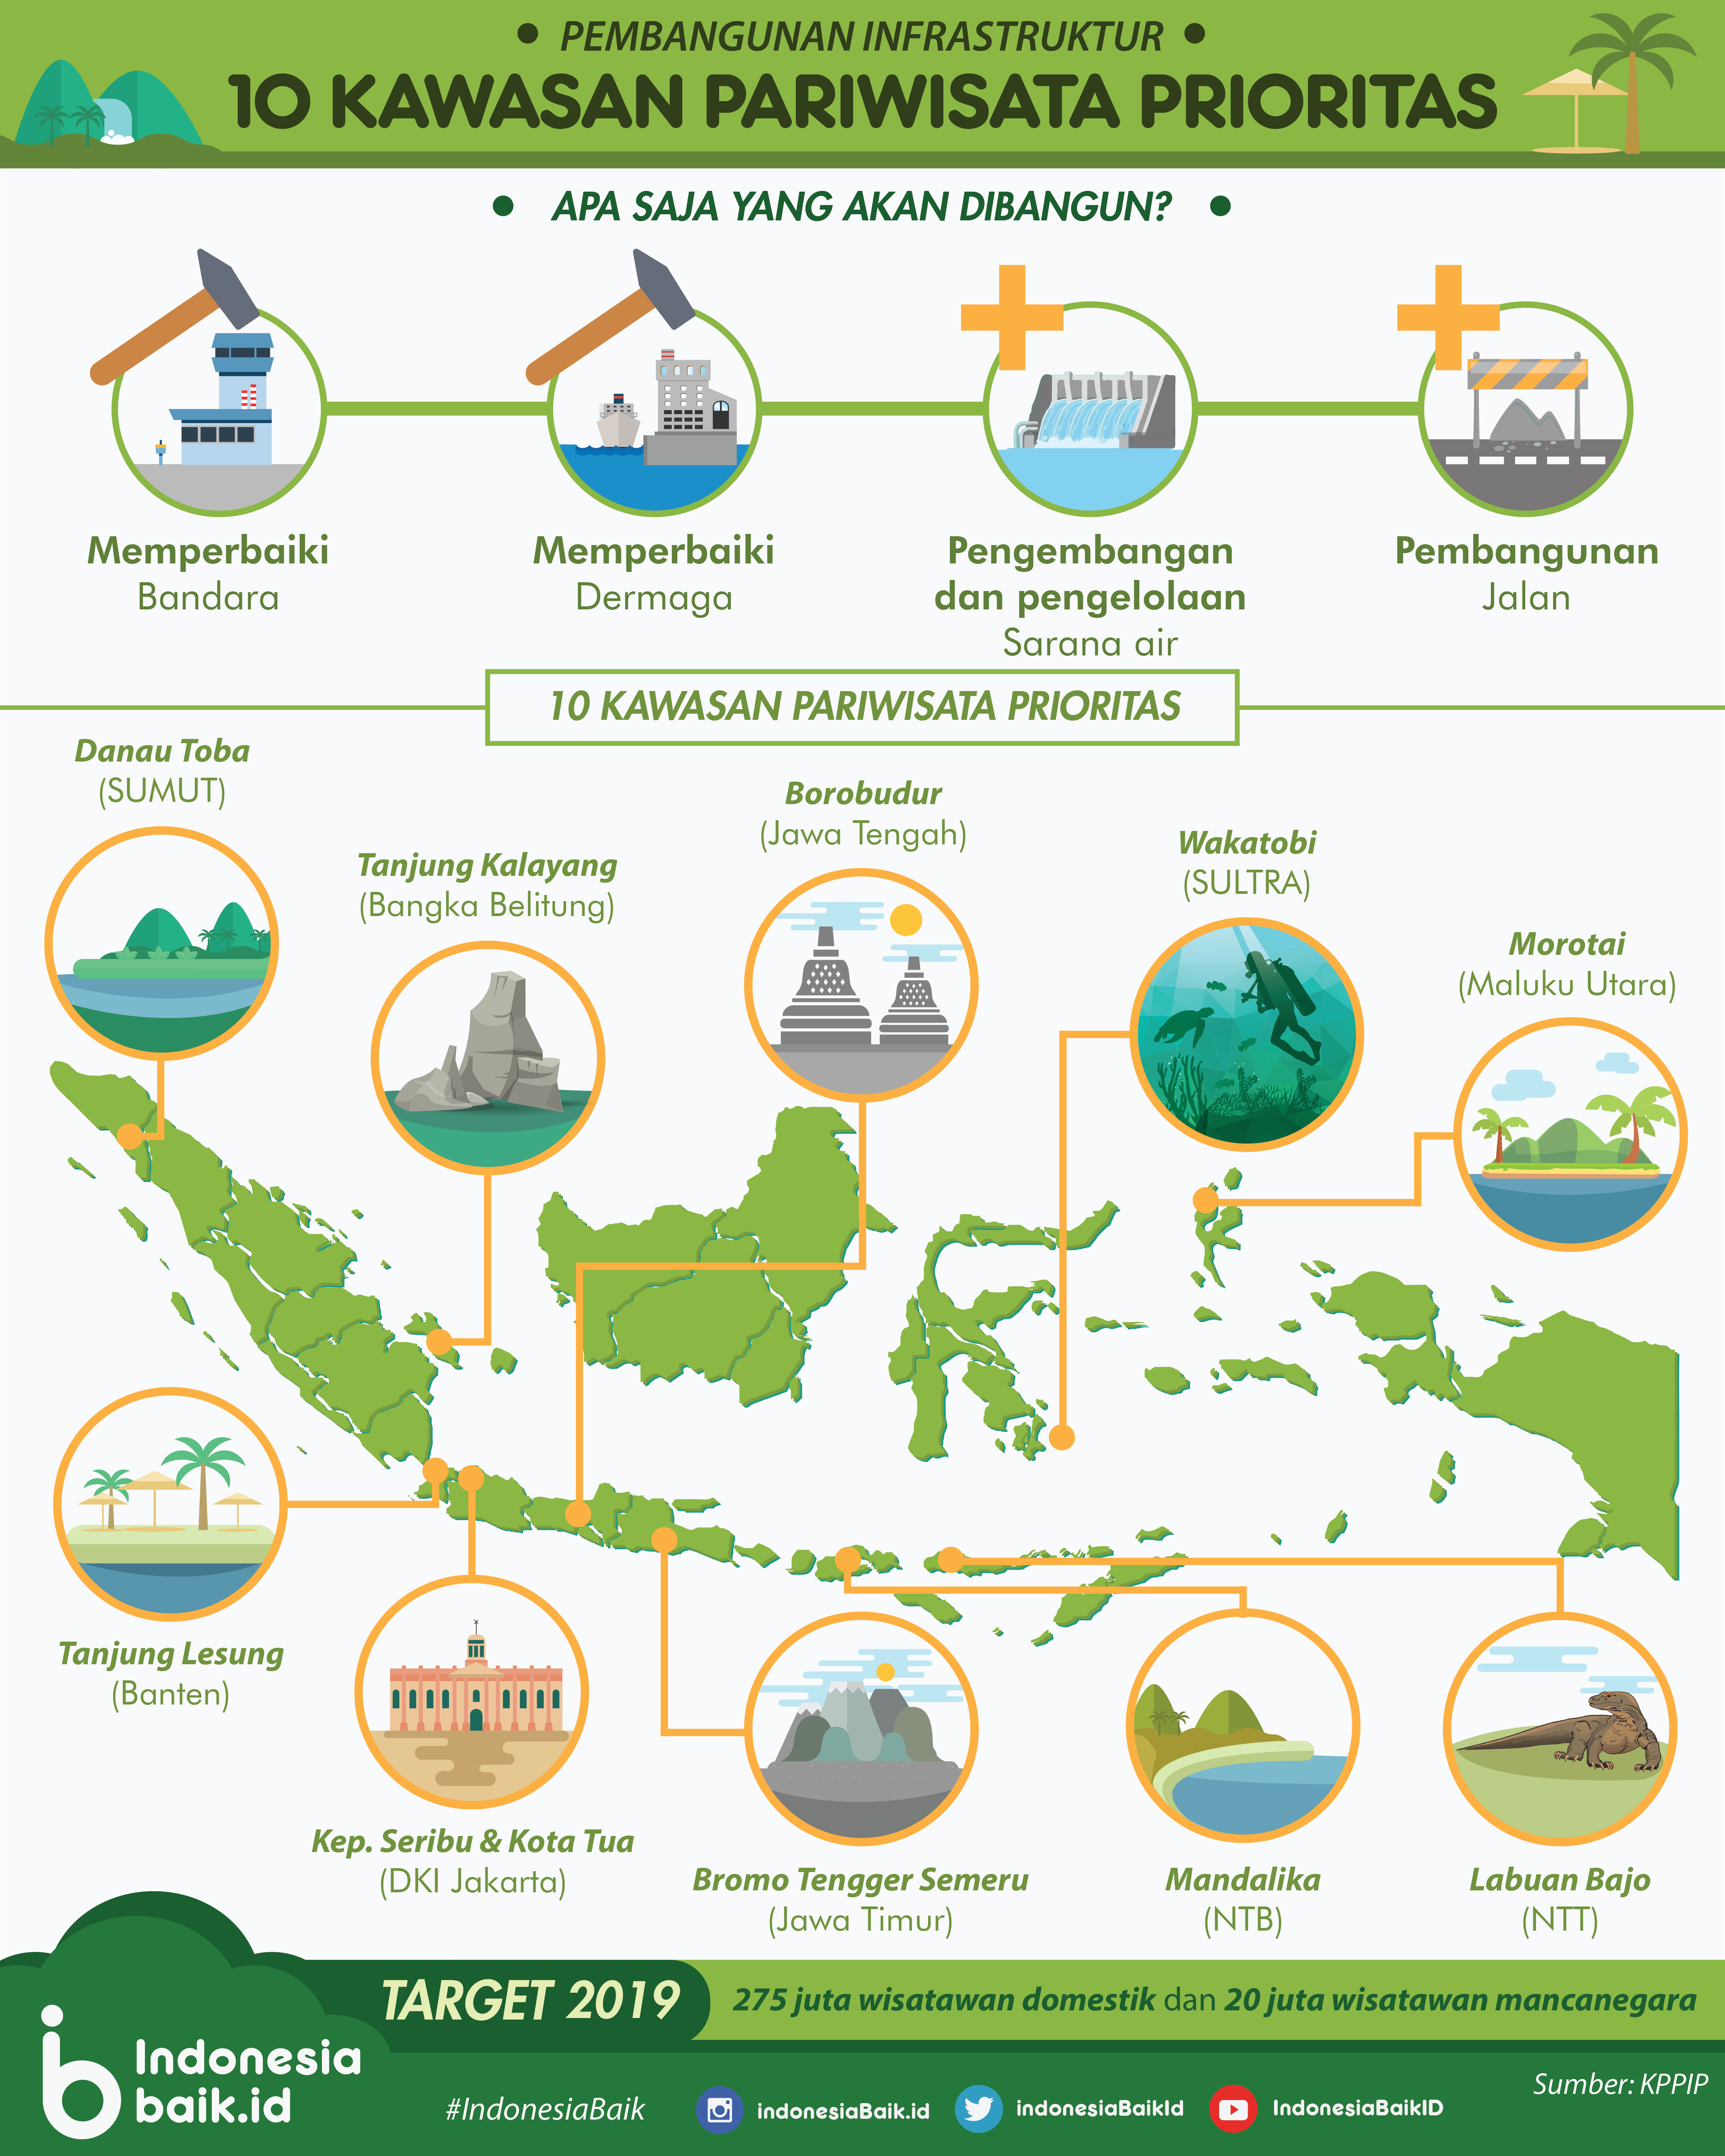 9 Kawasan Pariwisata Prioritas  Indonesia Baik